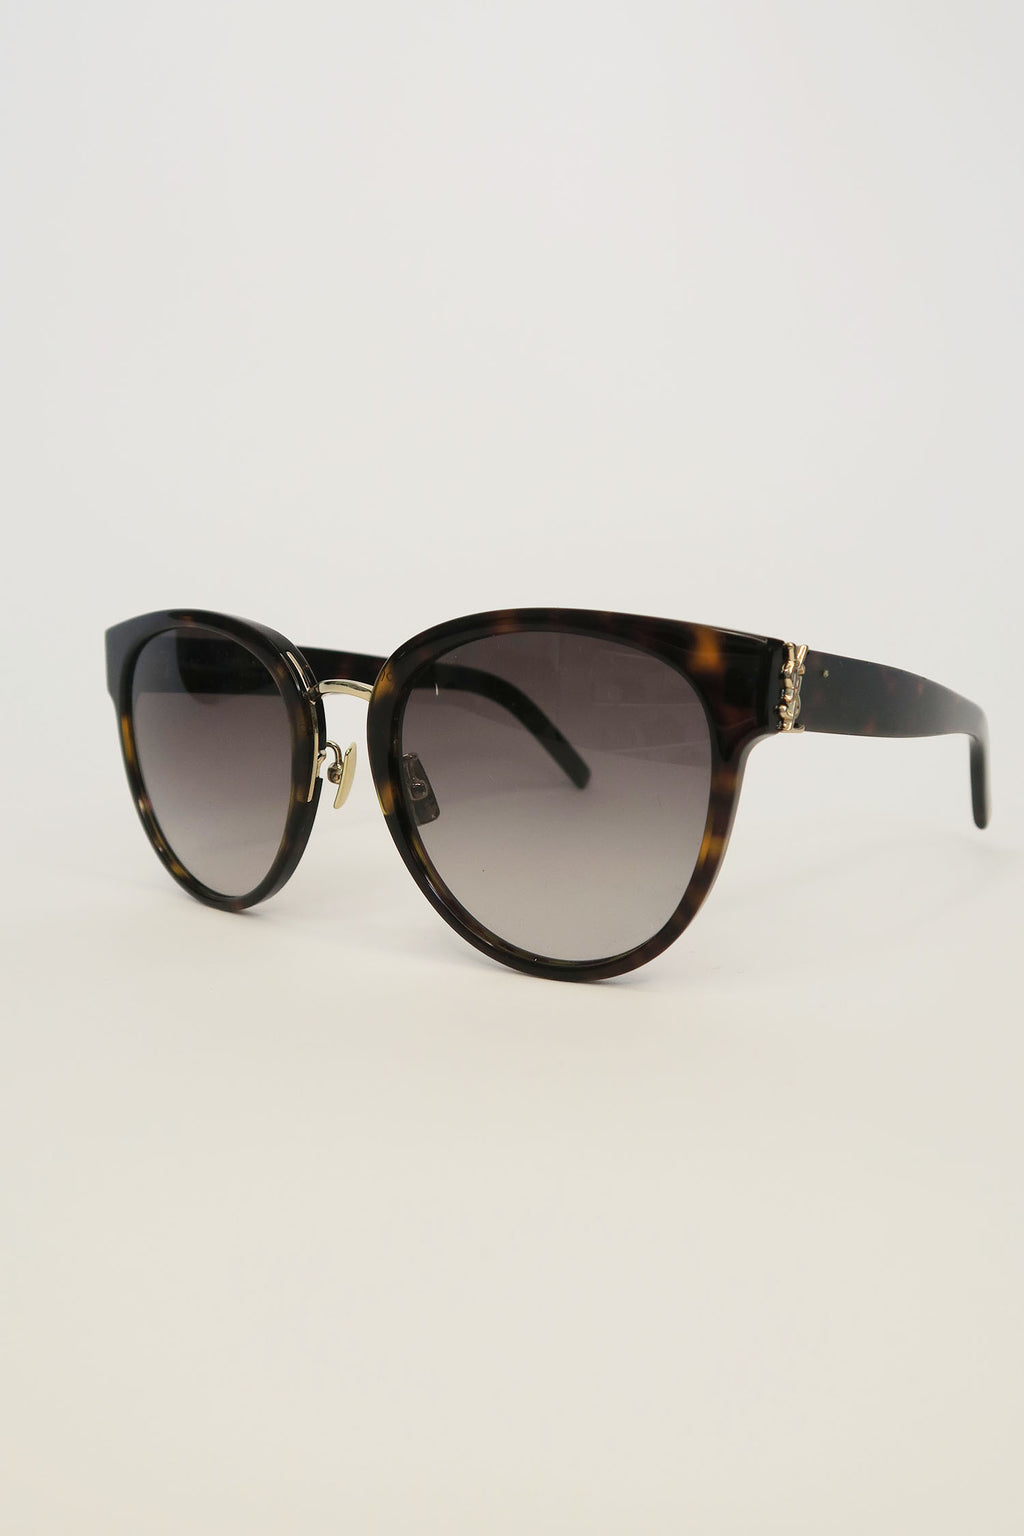 Saint Laurent Tinted Sunglasses